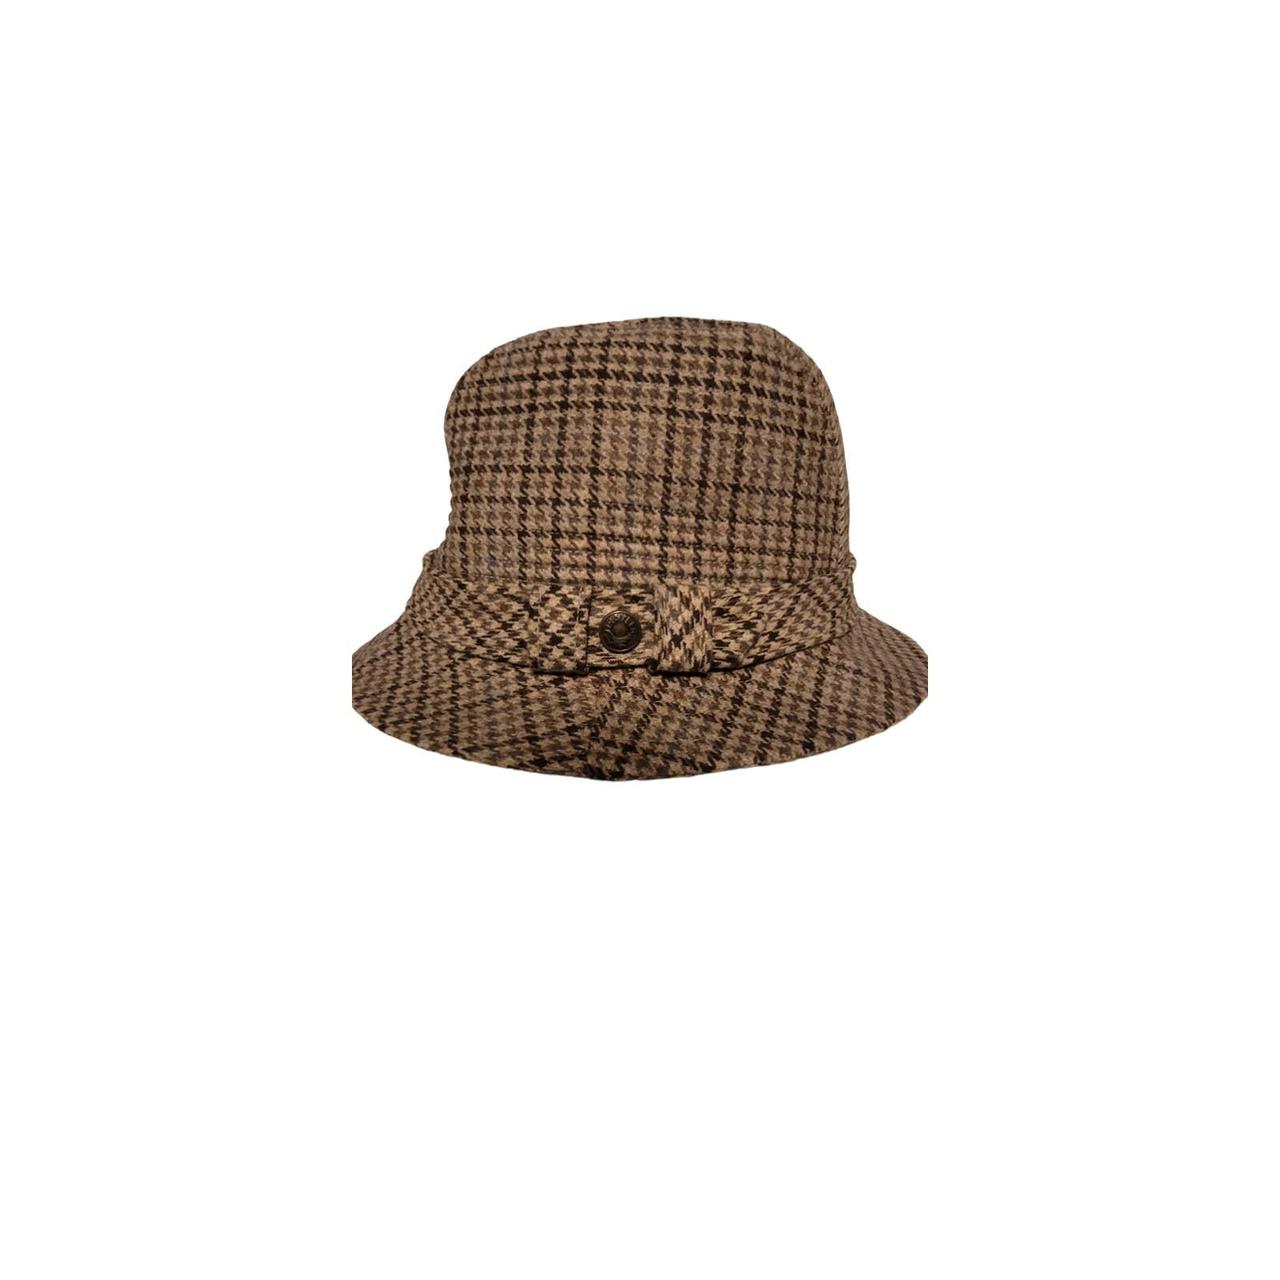 Country Gentleman Men's Khaki and Cream Hat (2)